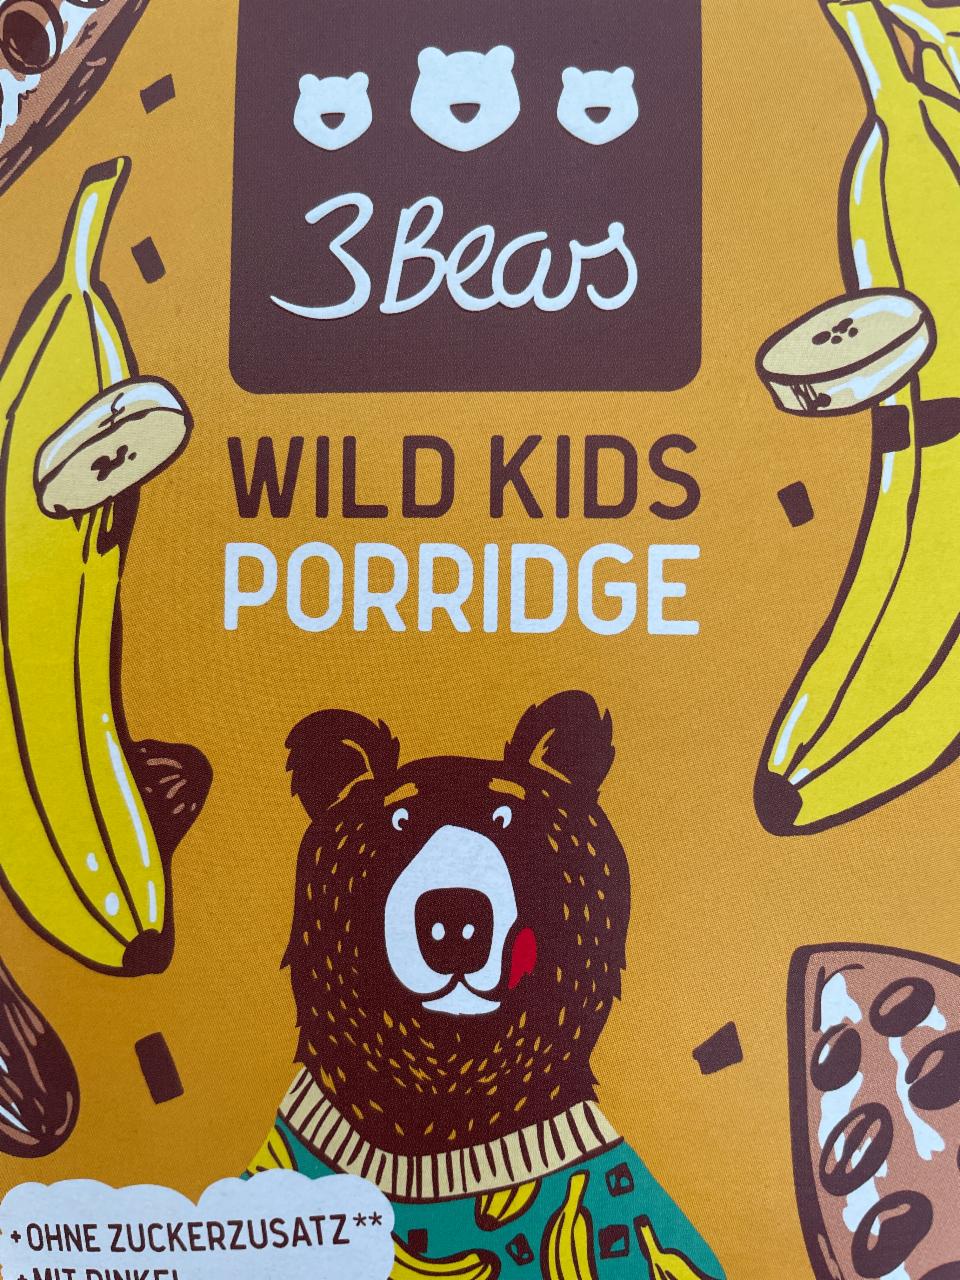 Fotografie - Wild Kids Porridge Kakao Banane 3 Bears